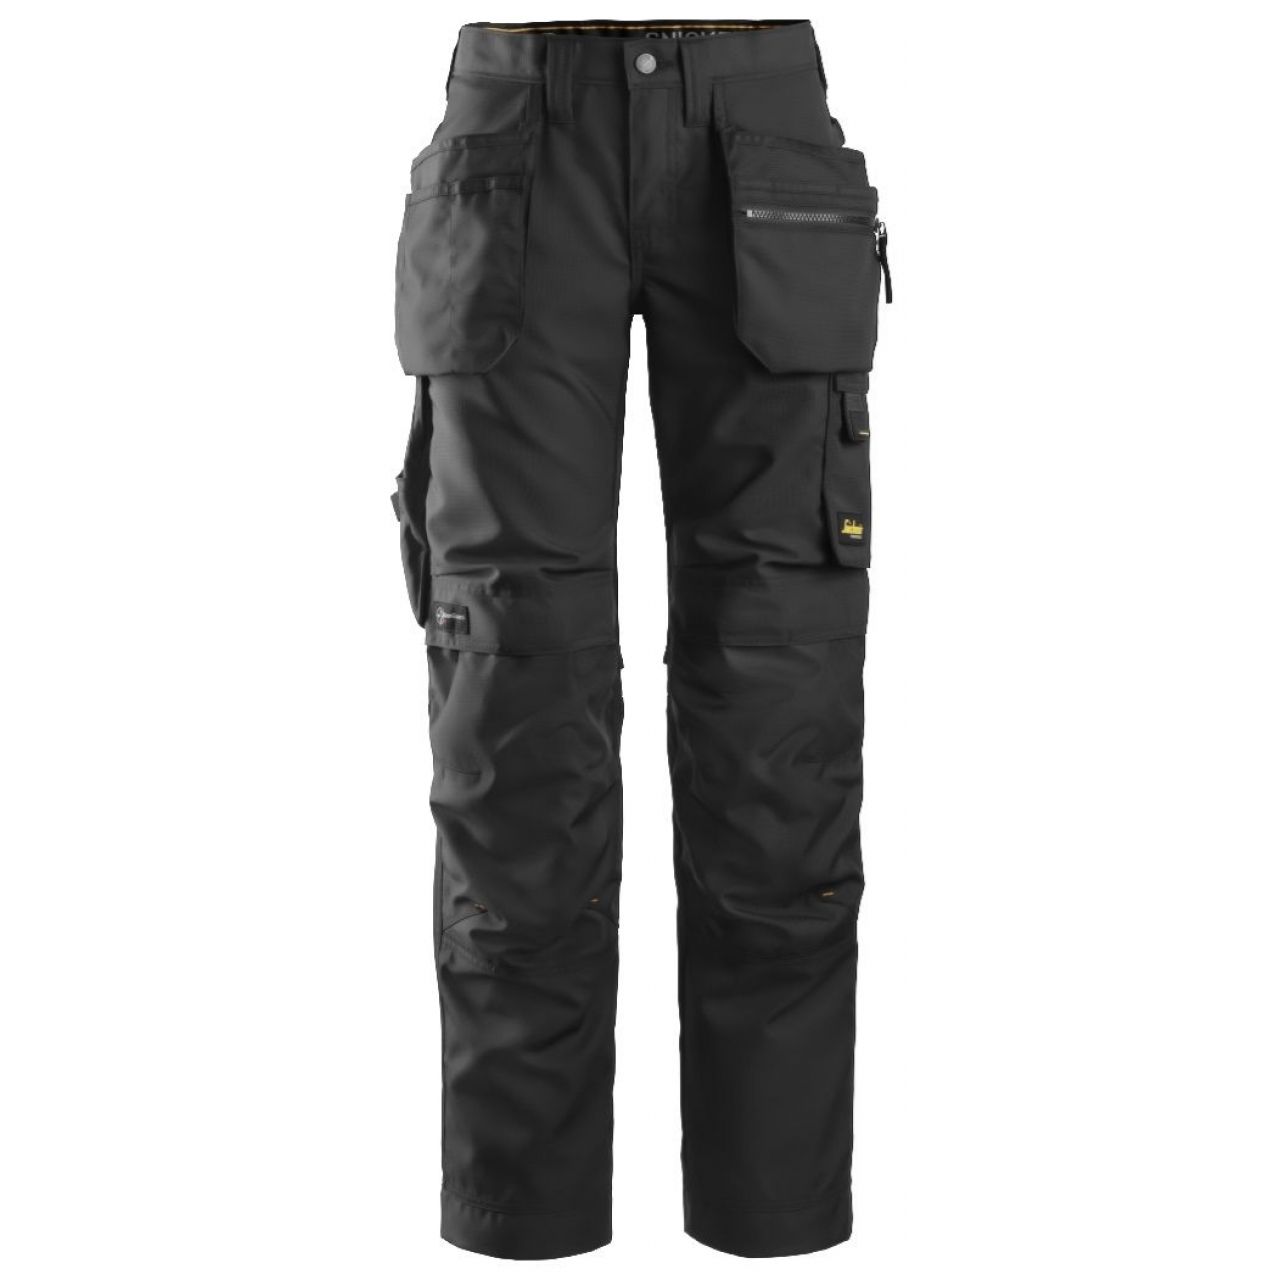 Pantalon de mujer AllroundWork+ con bolsillos flotantes negro talla 052